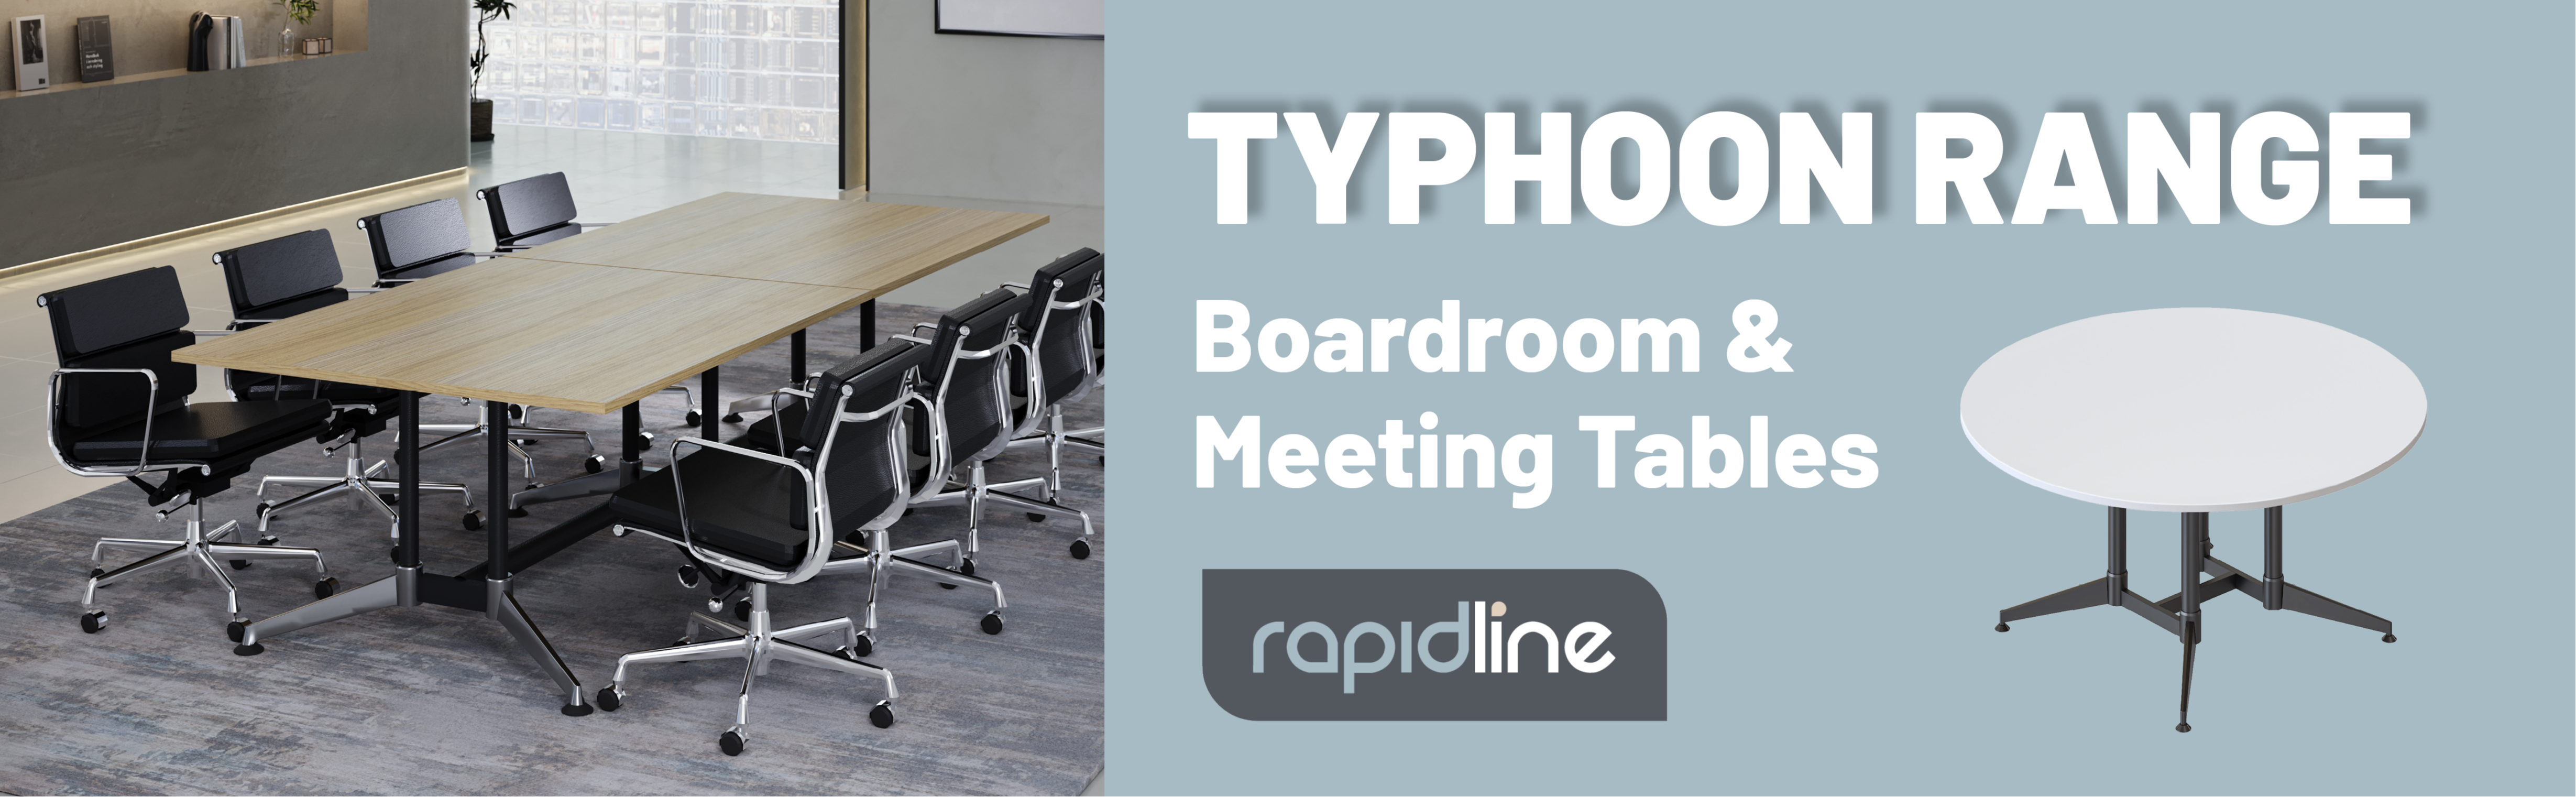 New Typhoon Meeting and Boardroom Table Range